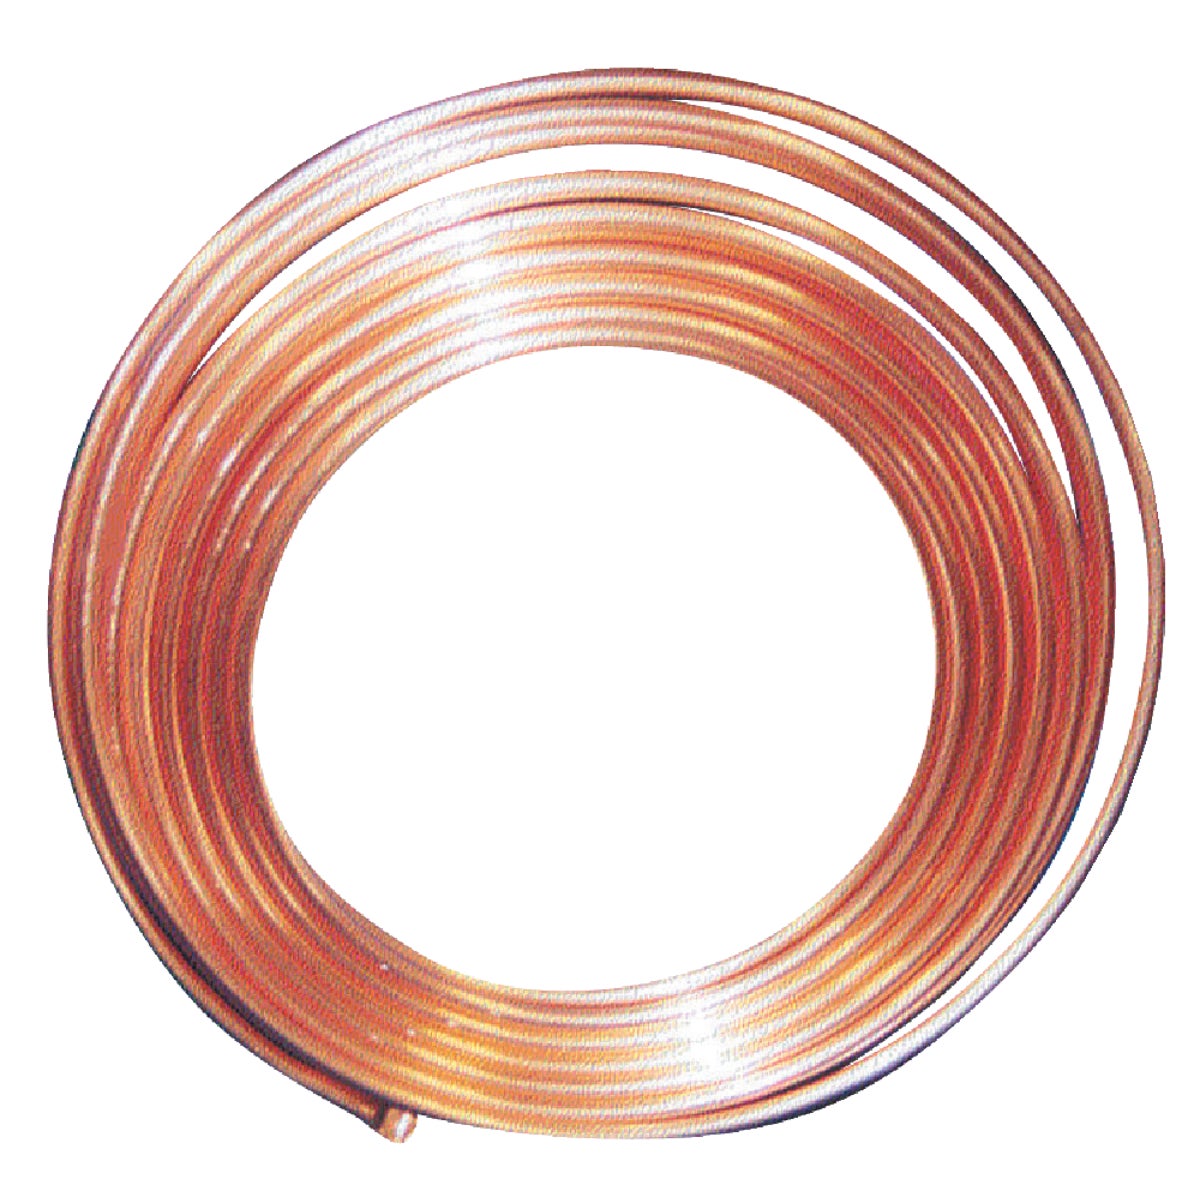 B&K 1/4 In. ID x 60 Ft. Type L Copper Tubing